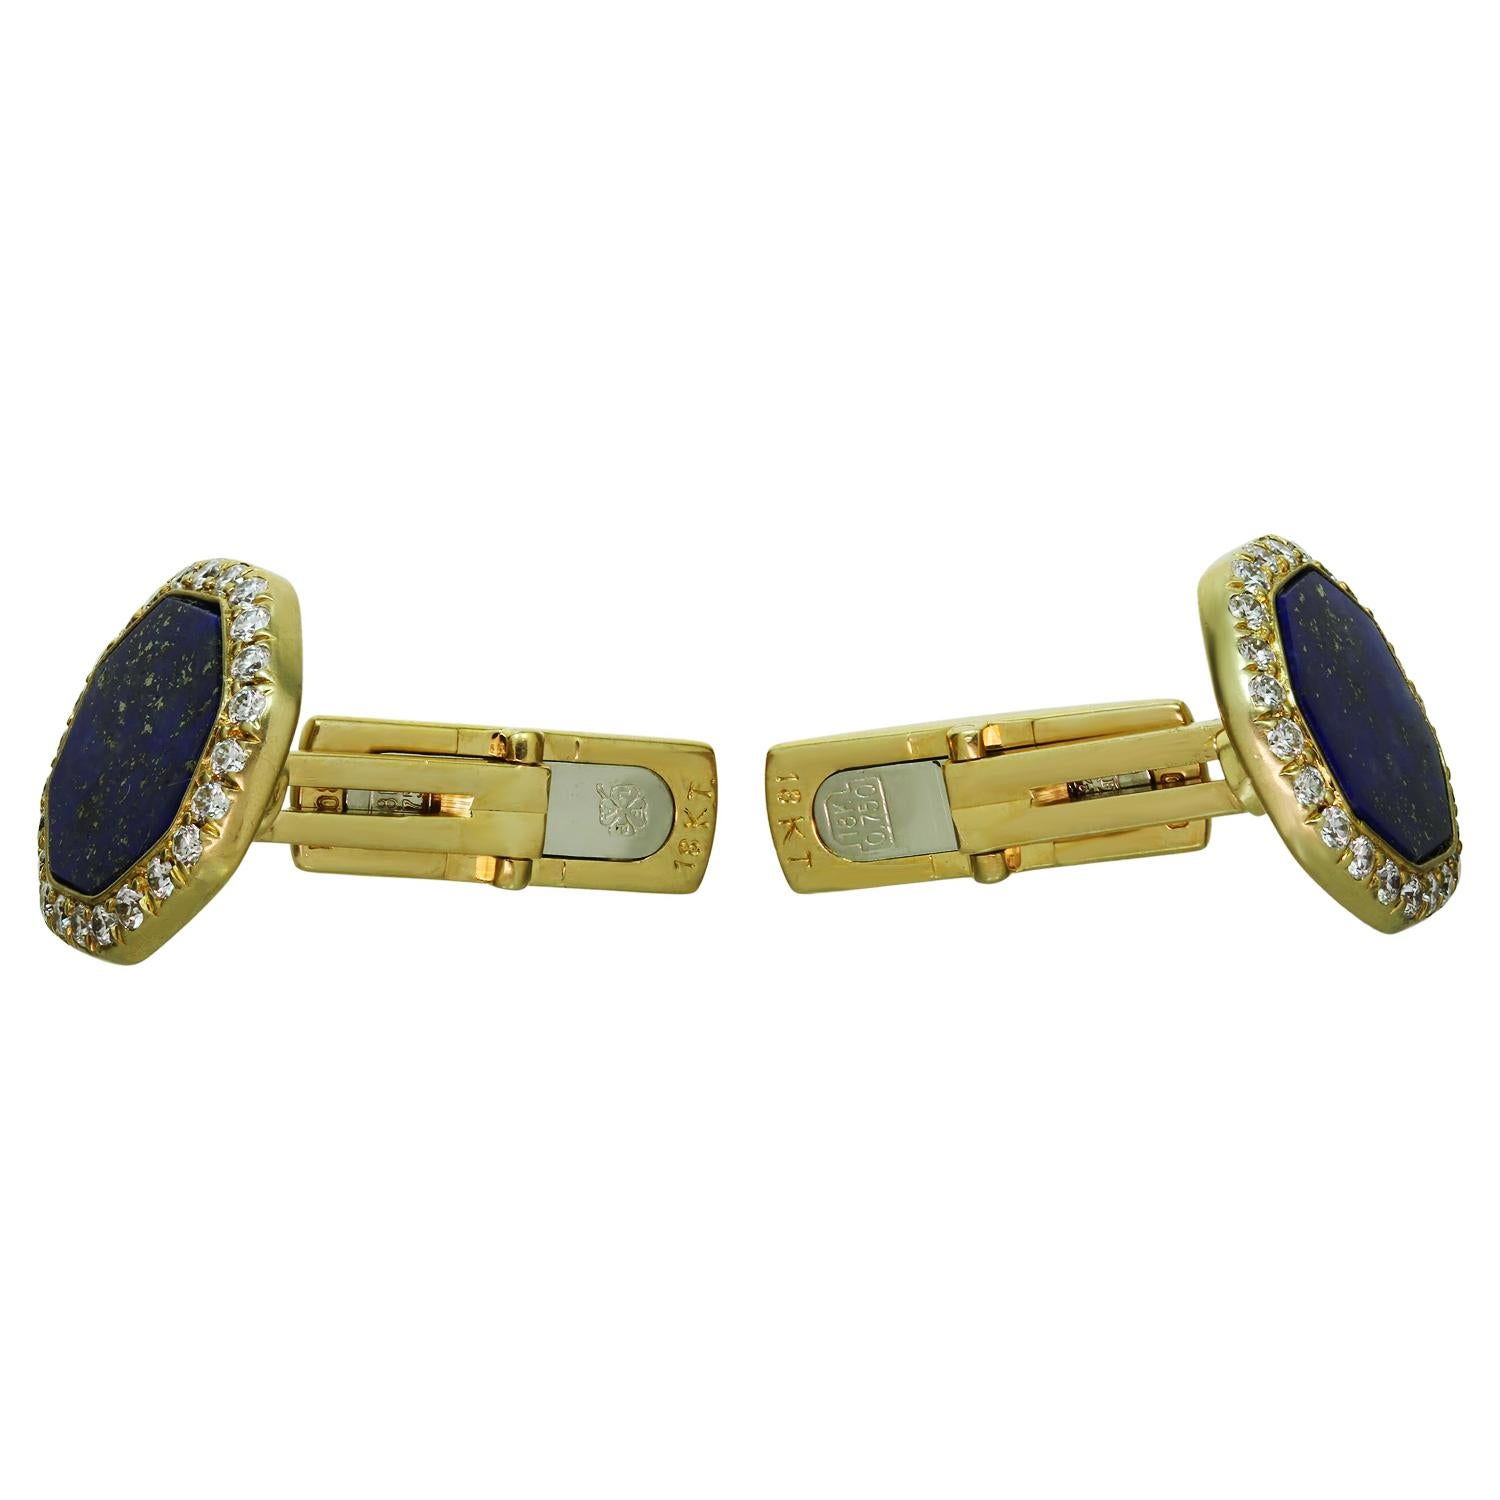 Brilliant Cut Van Cleef & Arpels 18k Yellow Gold Diamond Lapis Lazuli Cufflinks